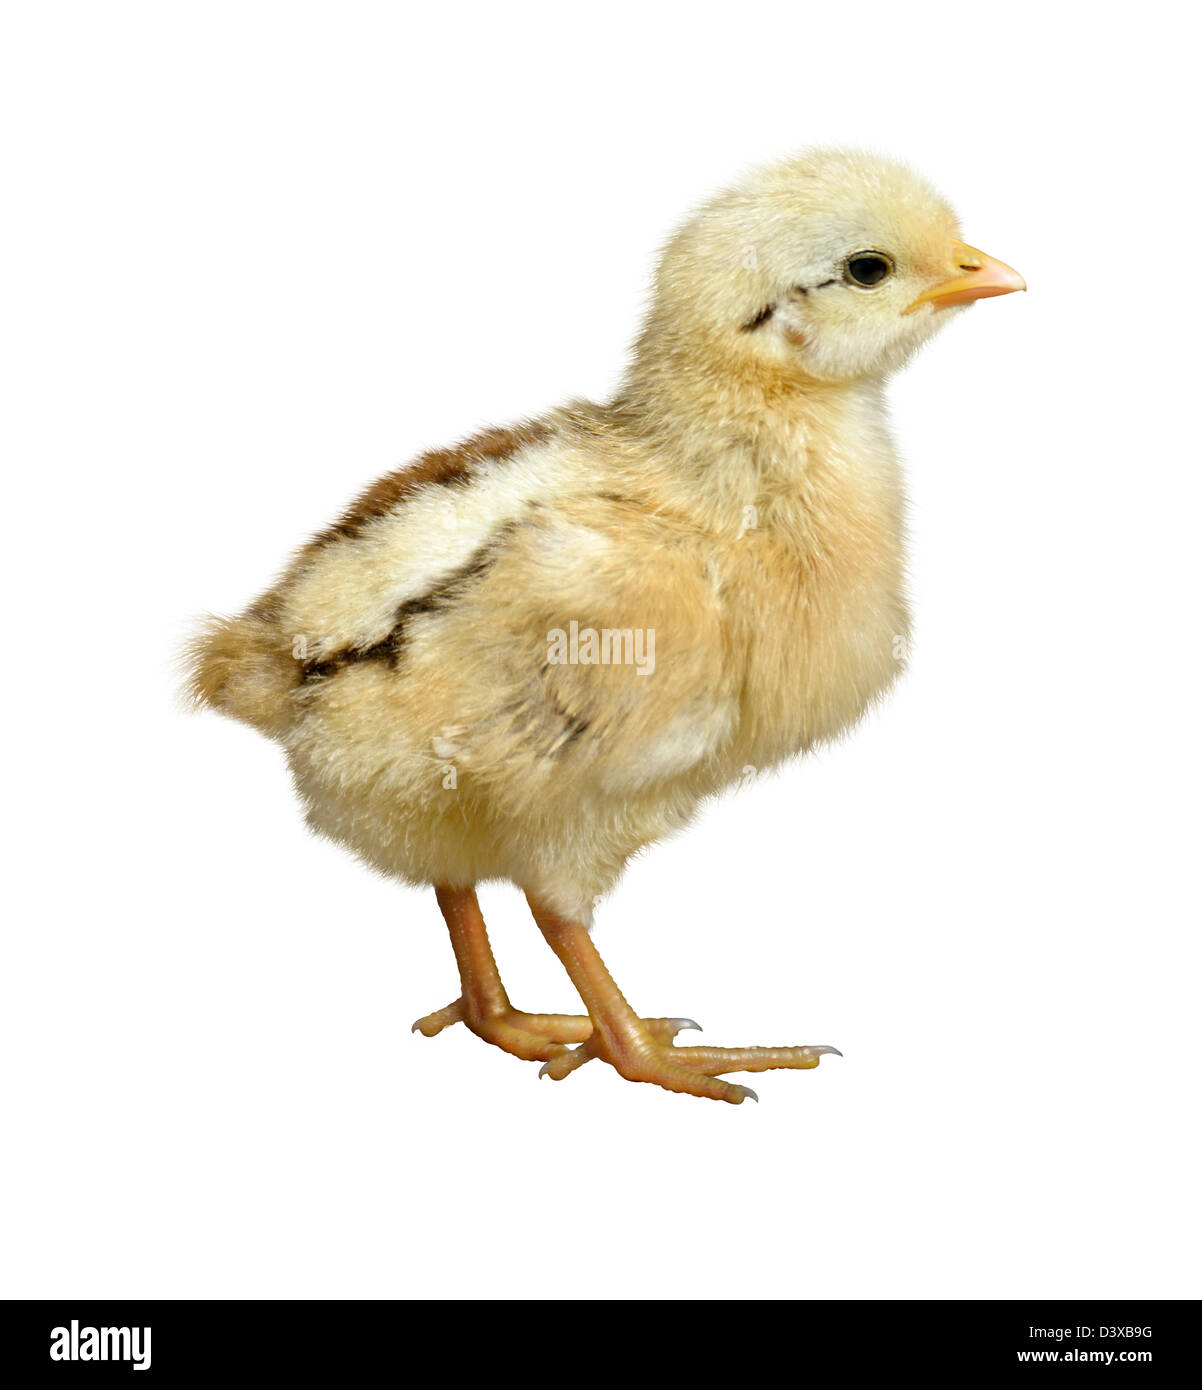 Little Chicken On White Background Stock Photo